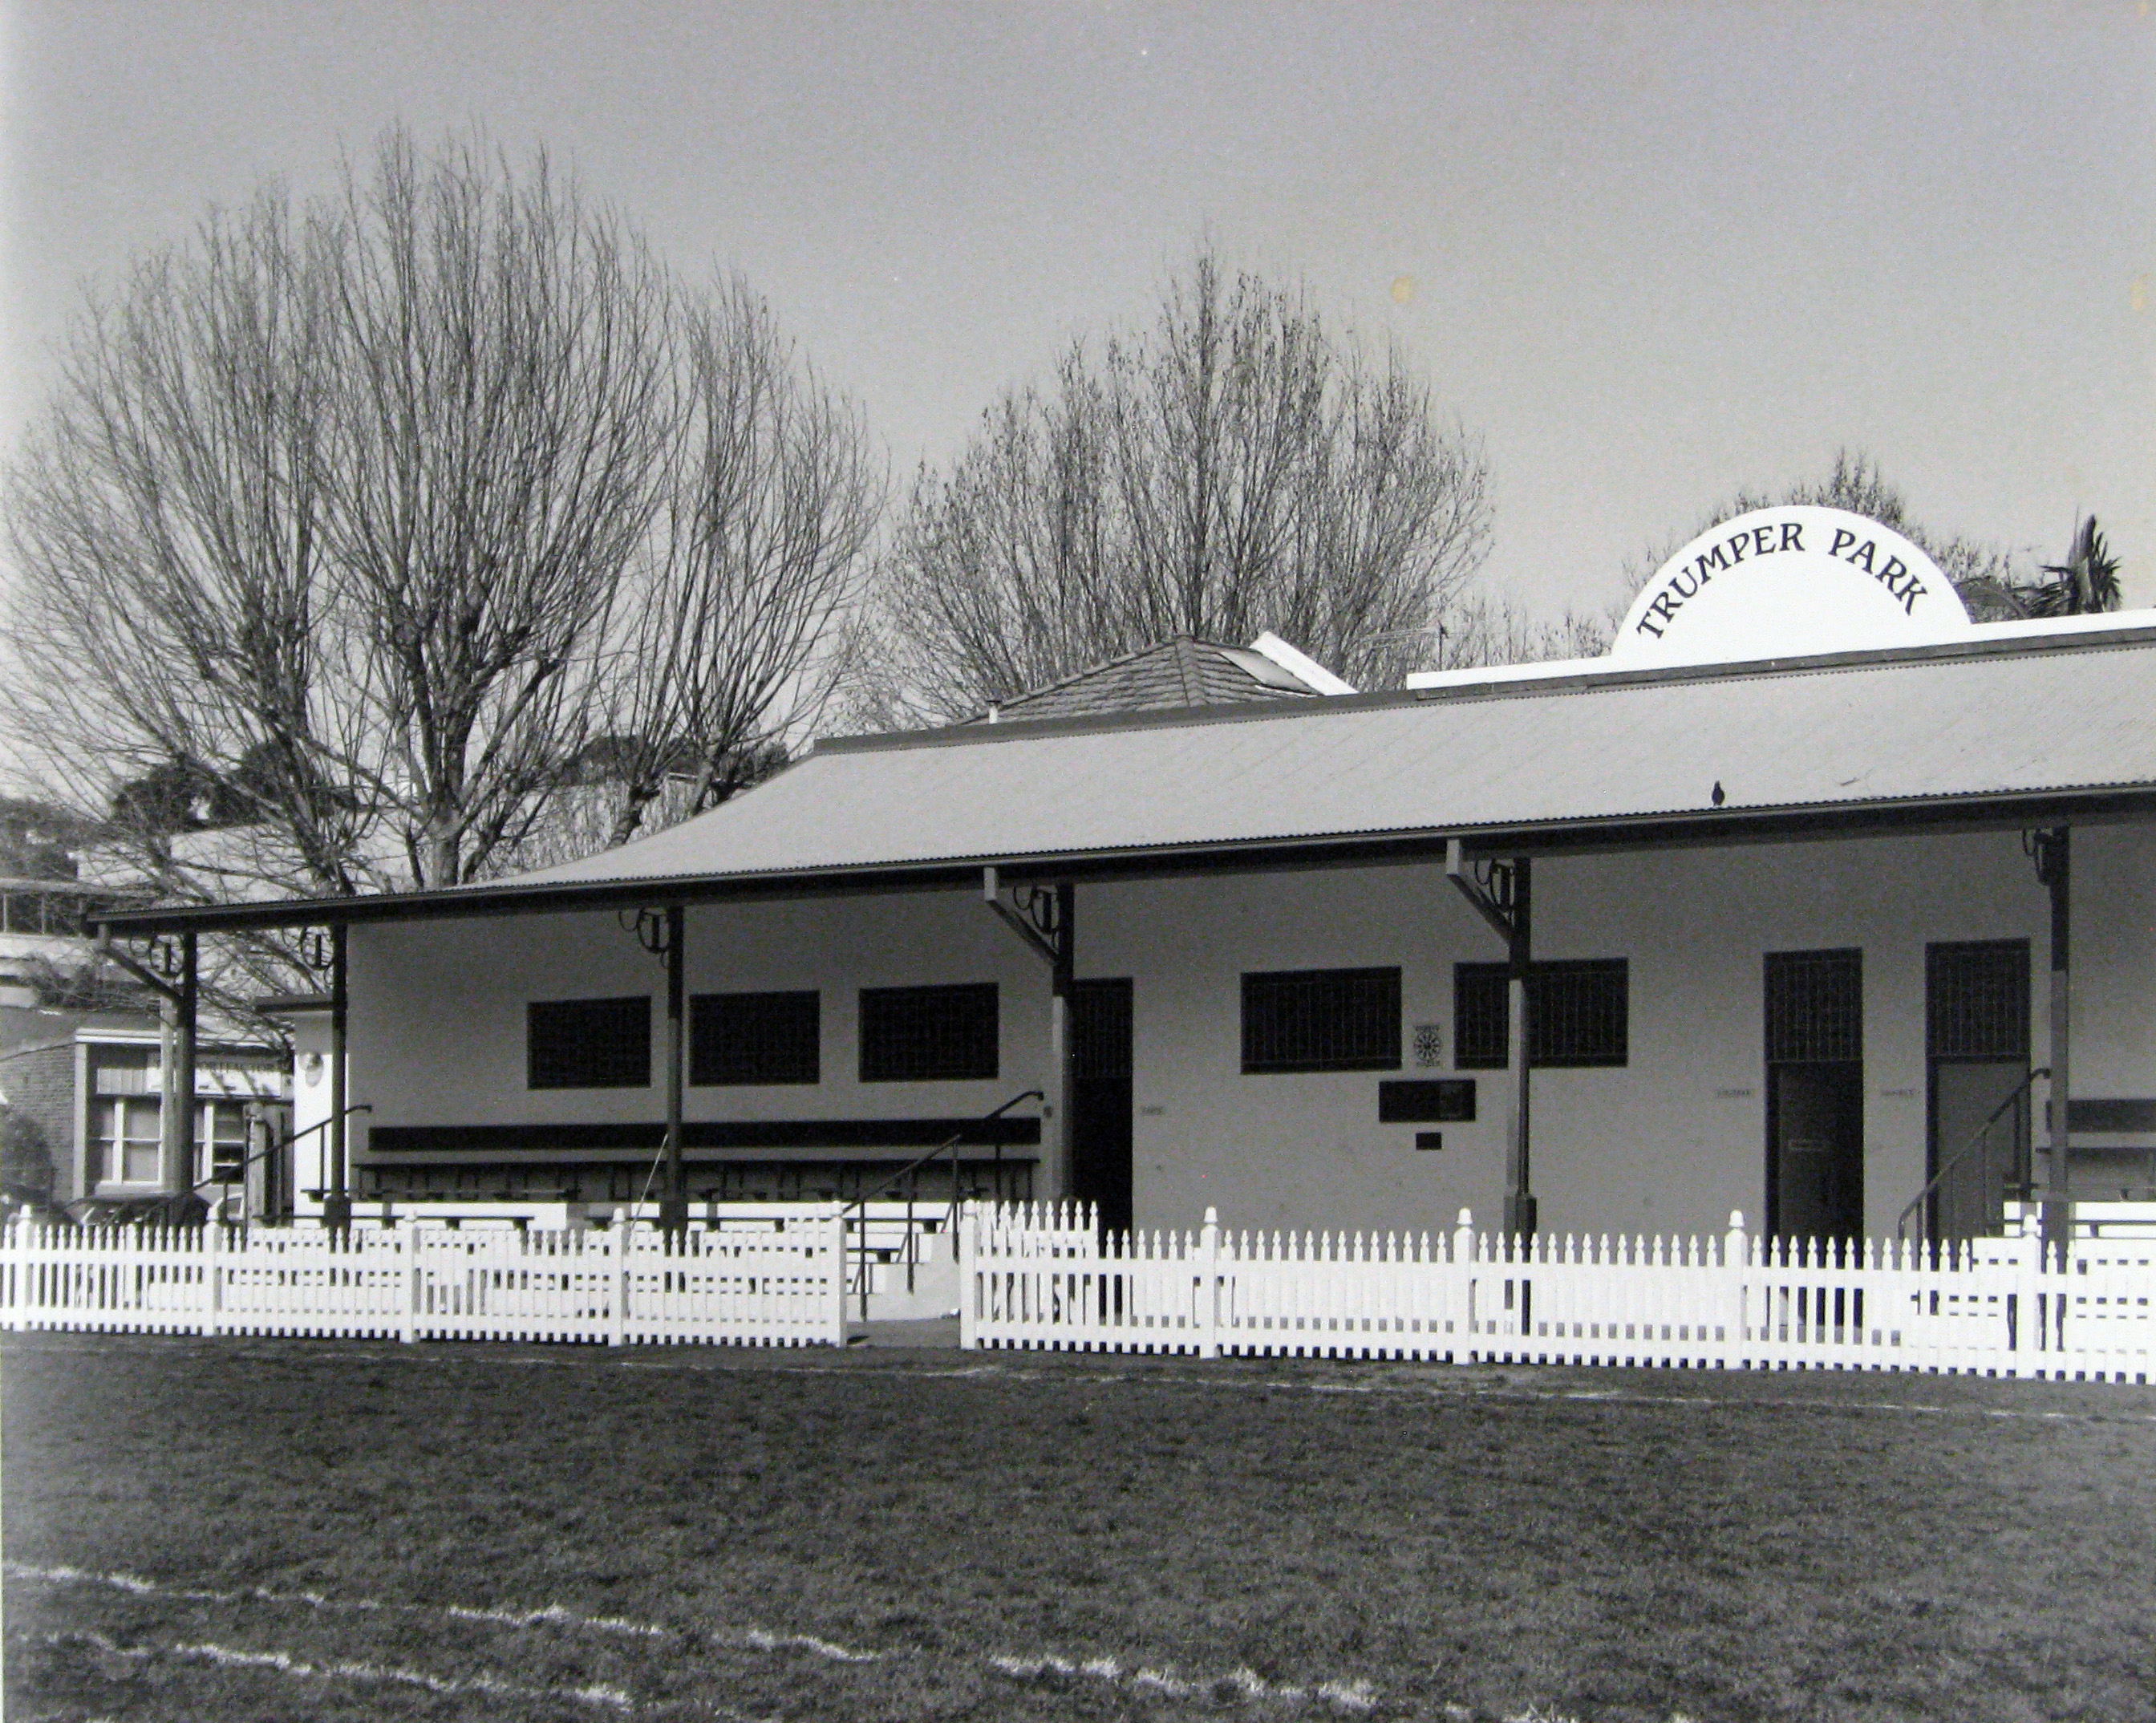 The pavilion at Trumper Park Oval 